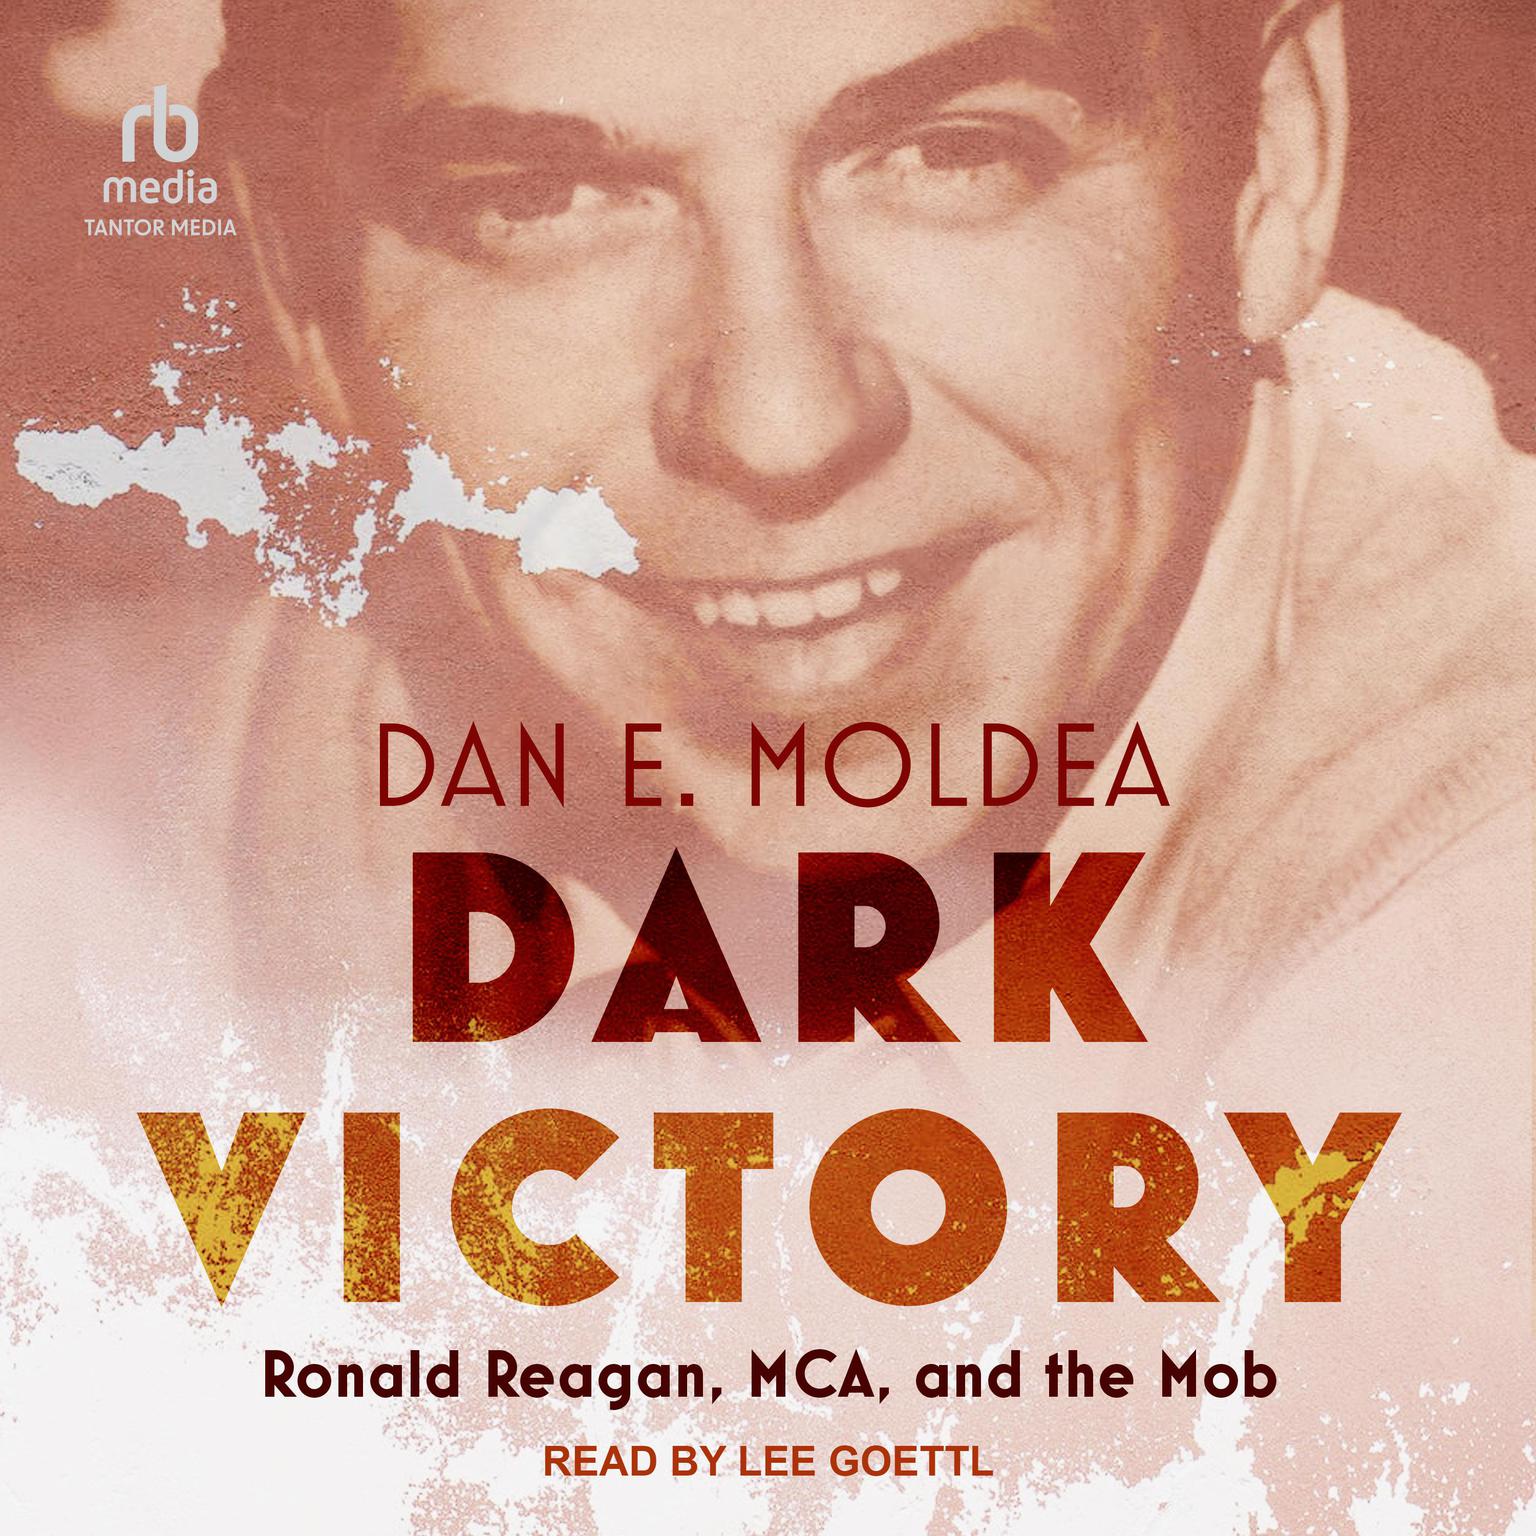 Dark Victory: Ronald Reagan, MCA, and the Mob Audiobook, by Dan E. Moldea